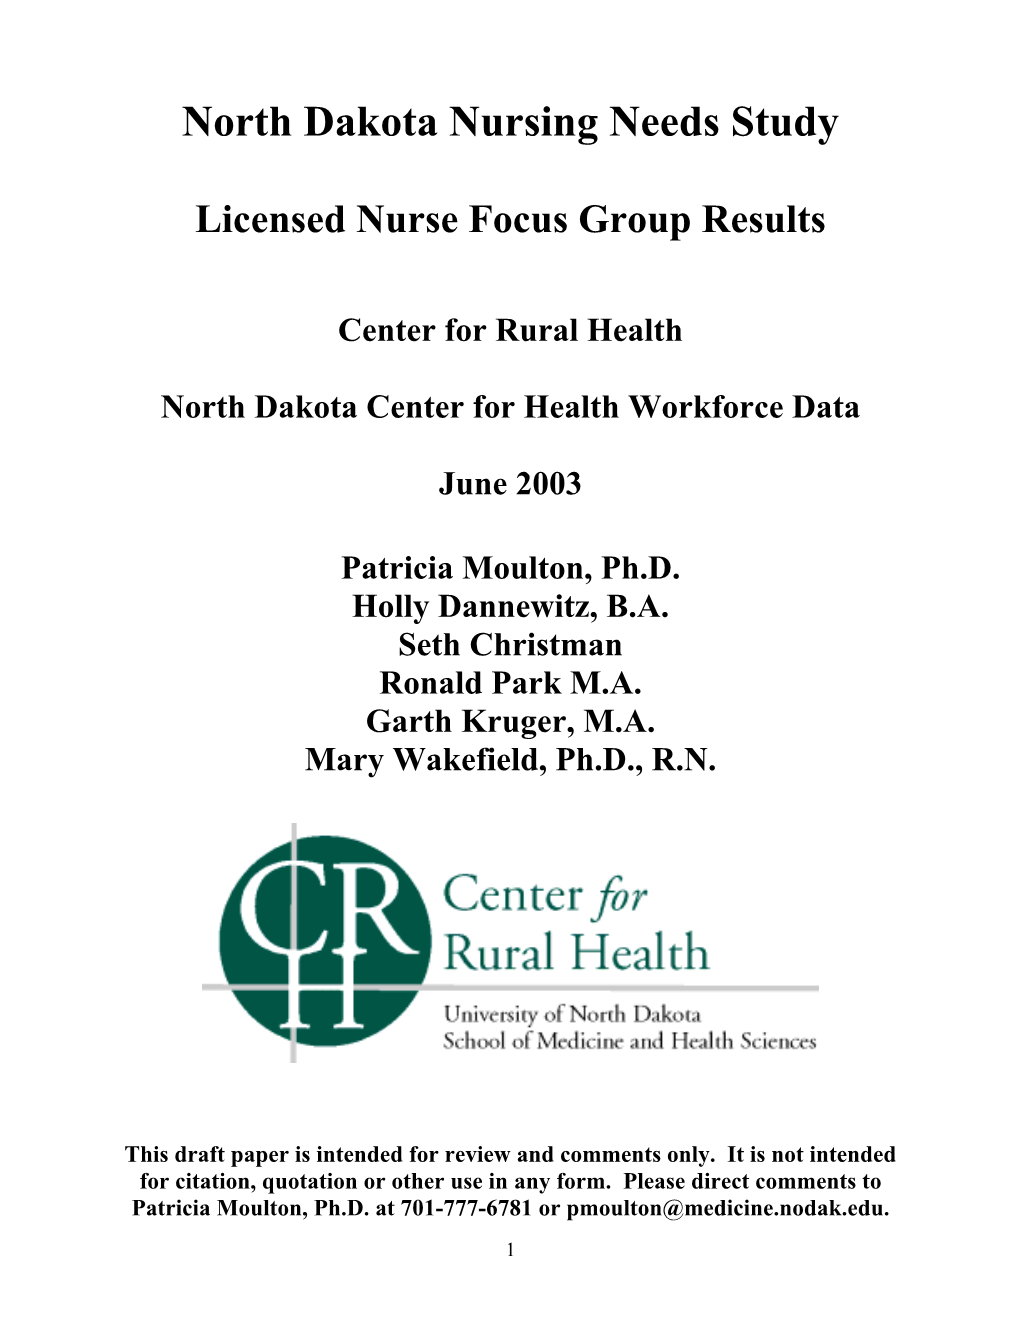 Licensed Nurse Focus Group Results